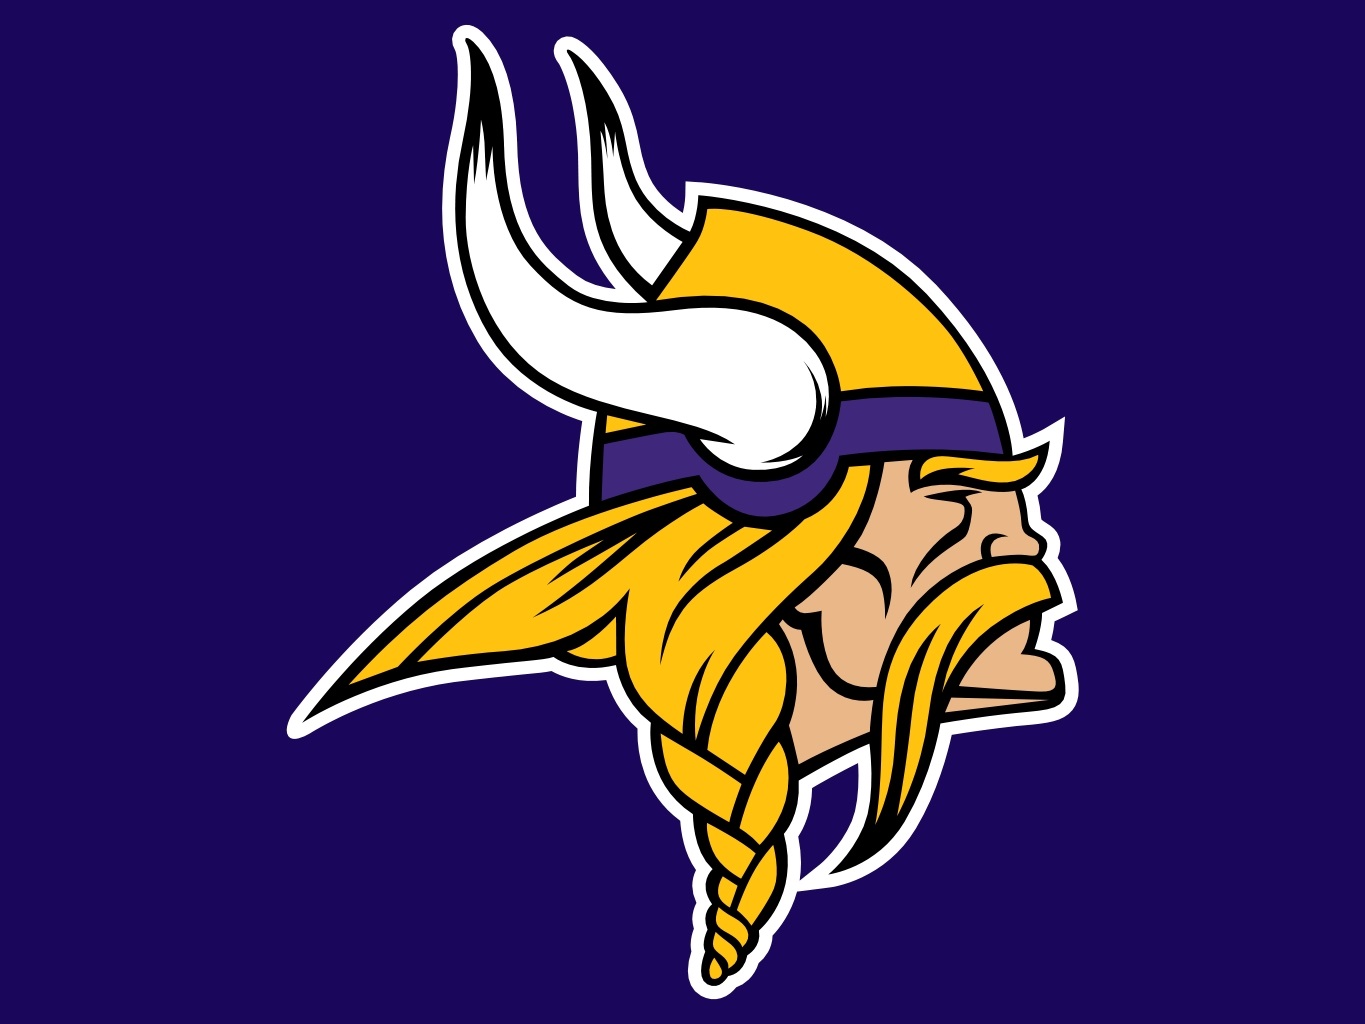 5. Minnesota Vikings Logo Tattoo - wide 4